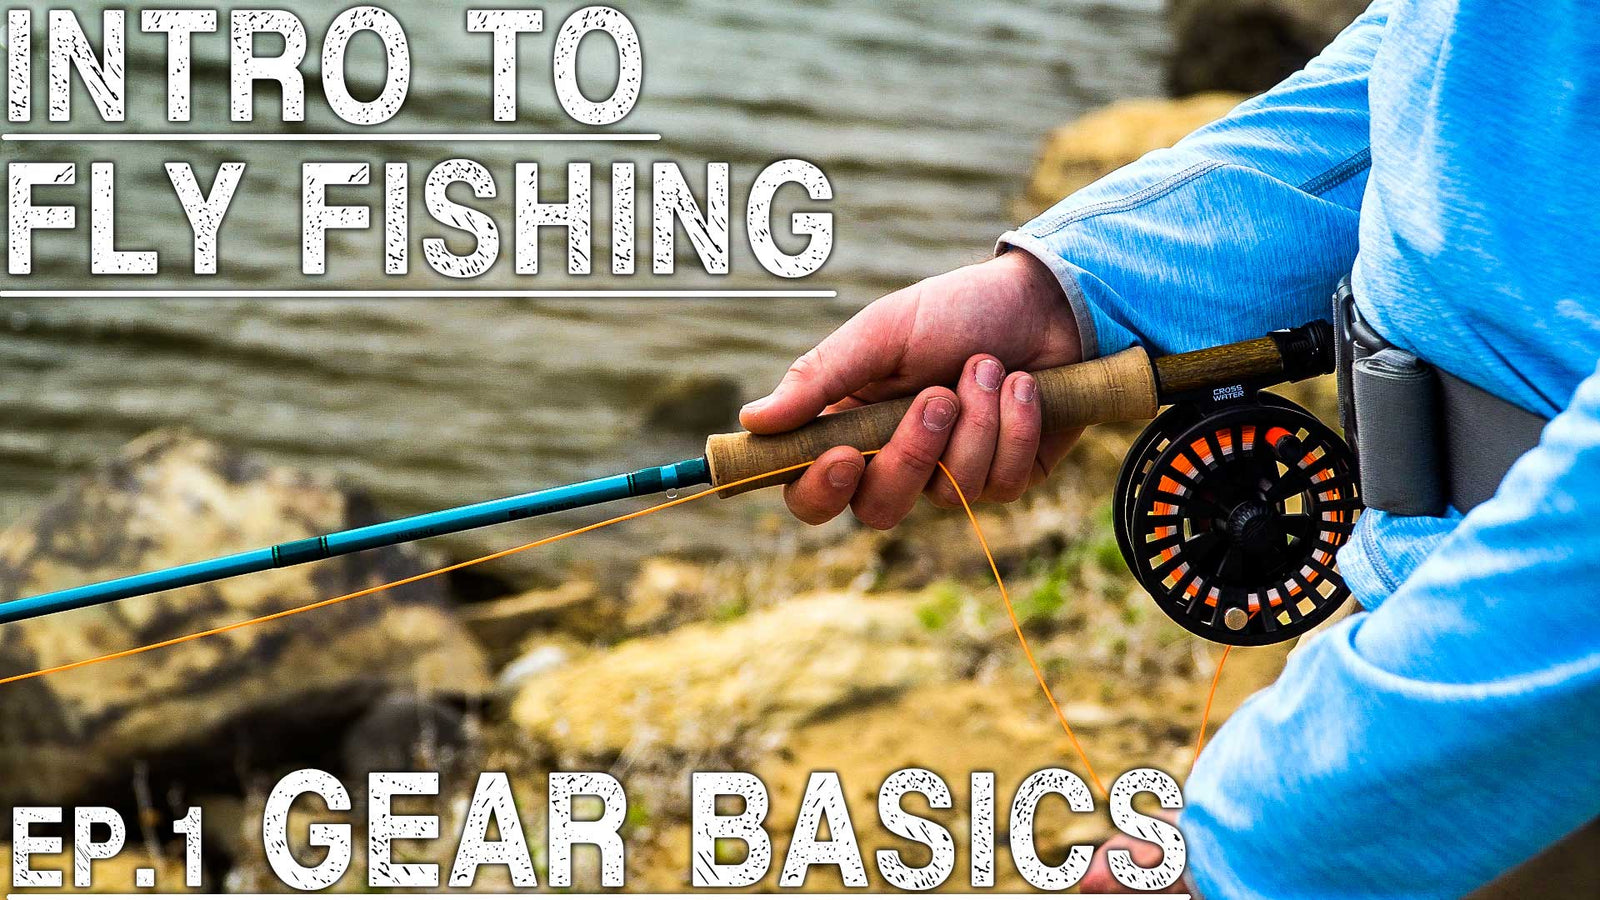 NEW Fly Fishing Basics